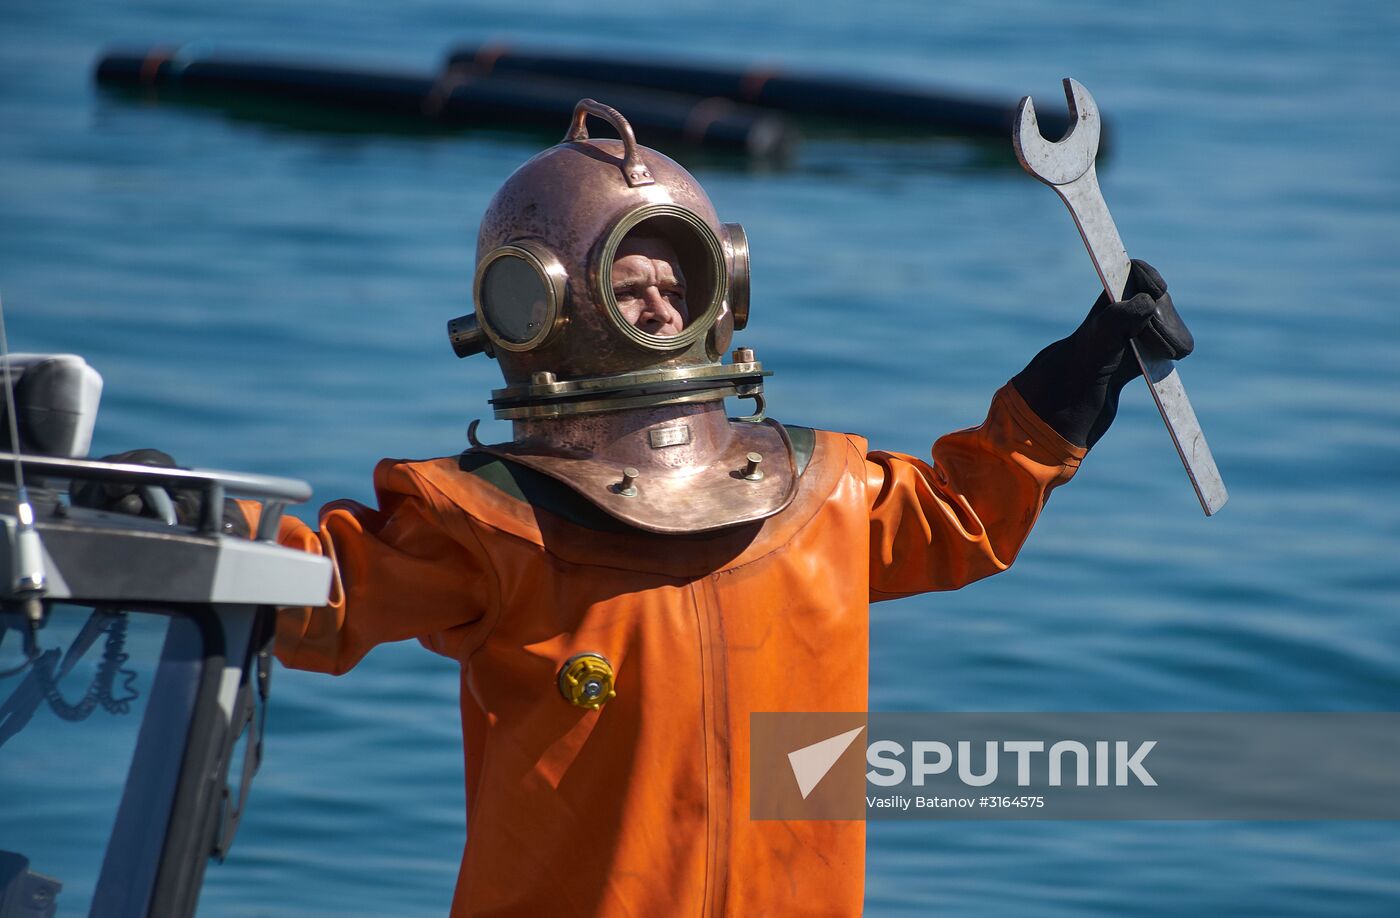 Kicking off Depth 2017 international multi-stage diving event in Sevastopol